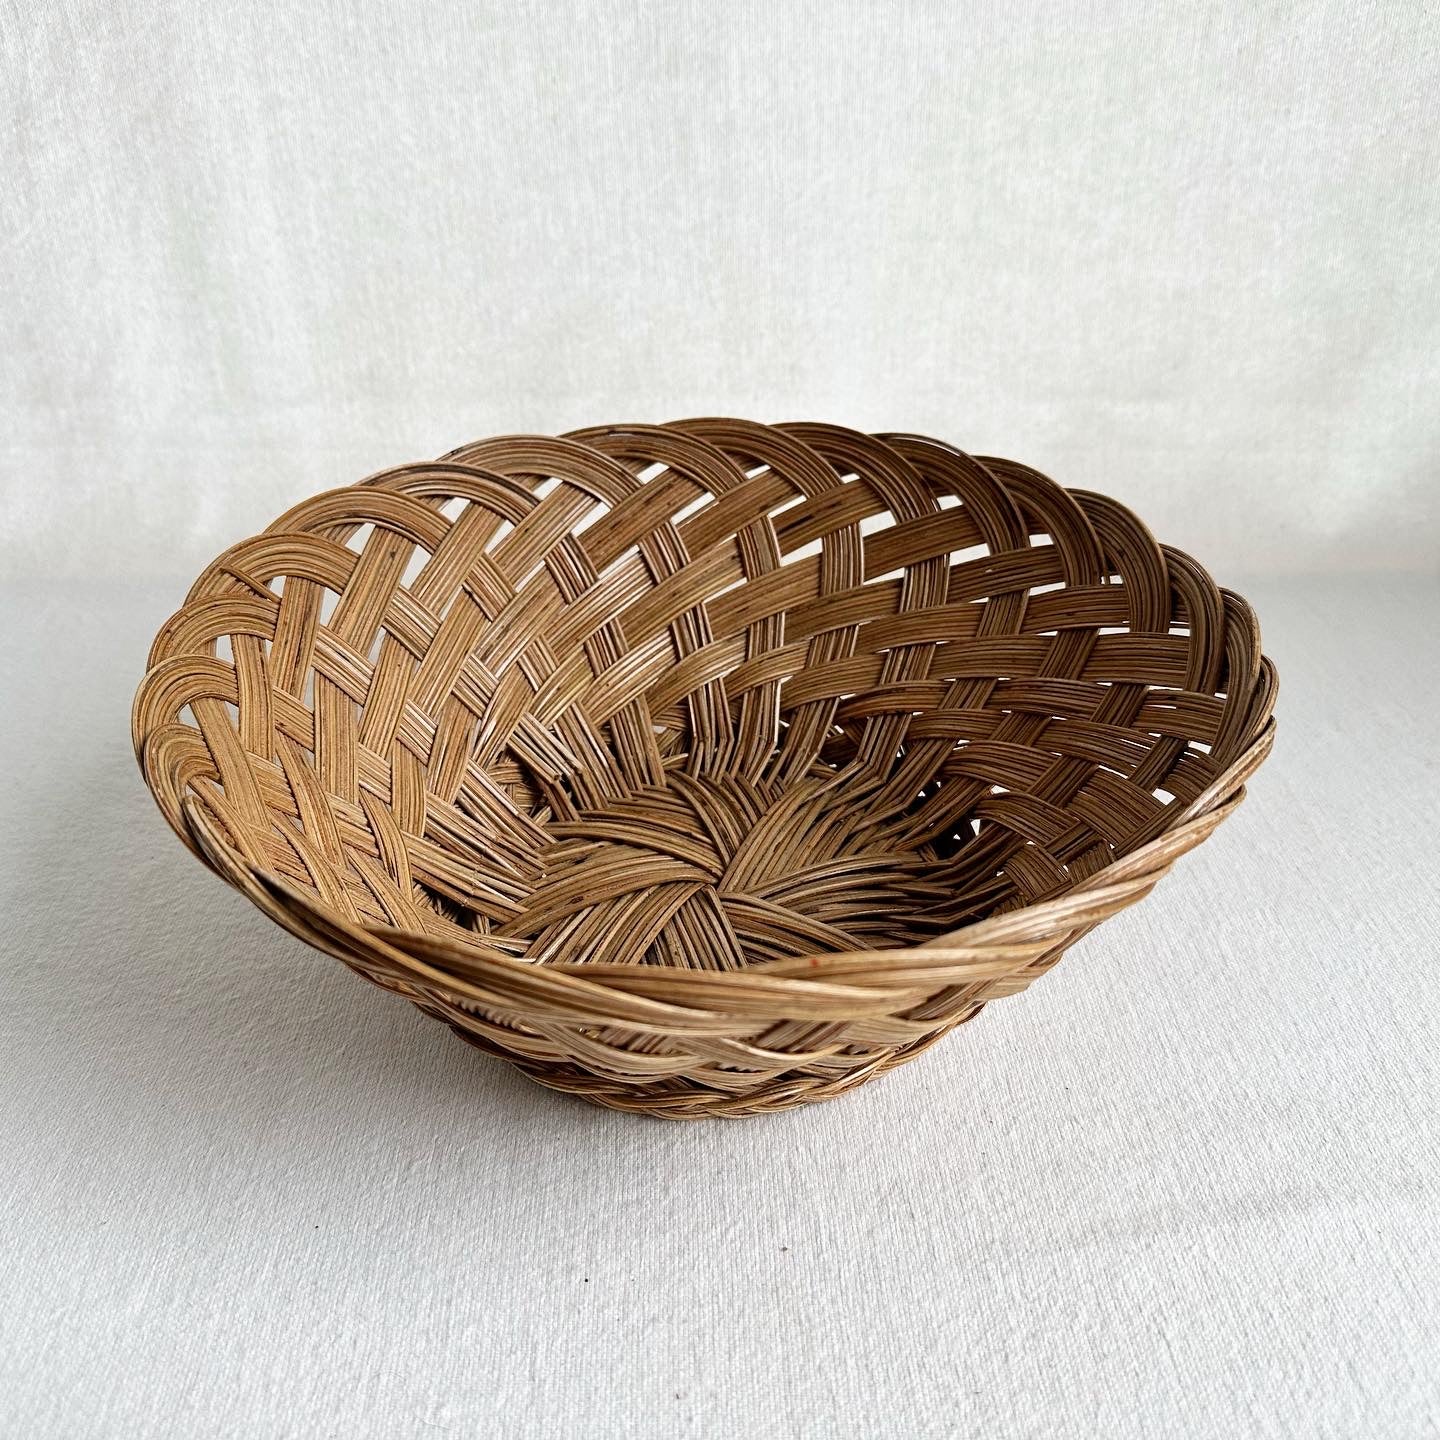 Philippine Coconut Midrib Basket